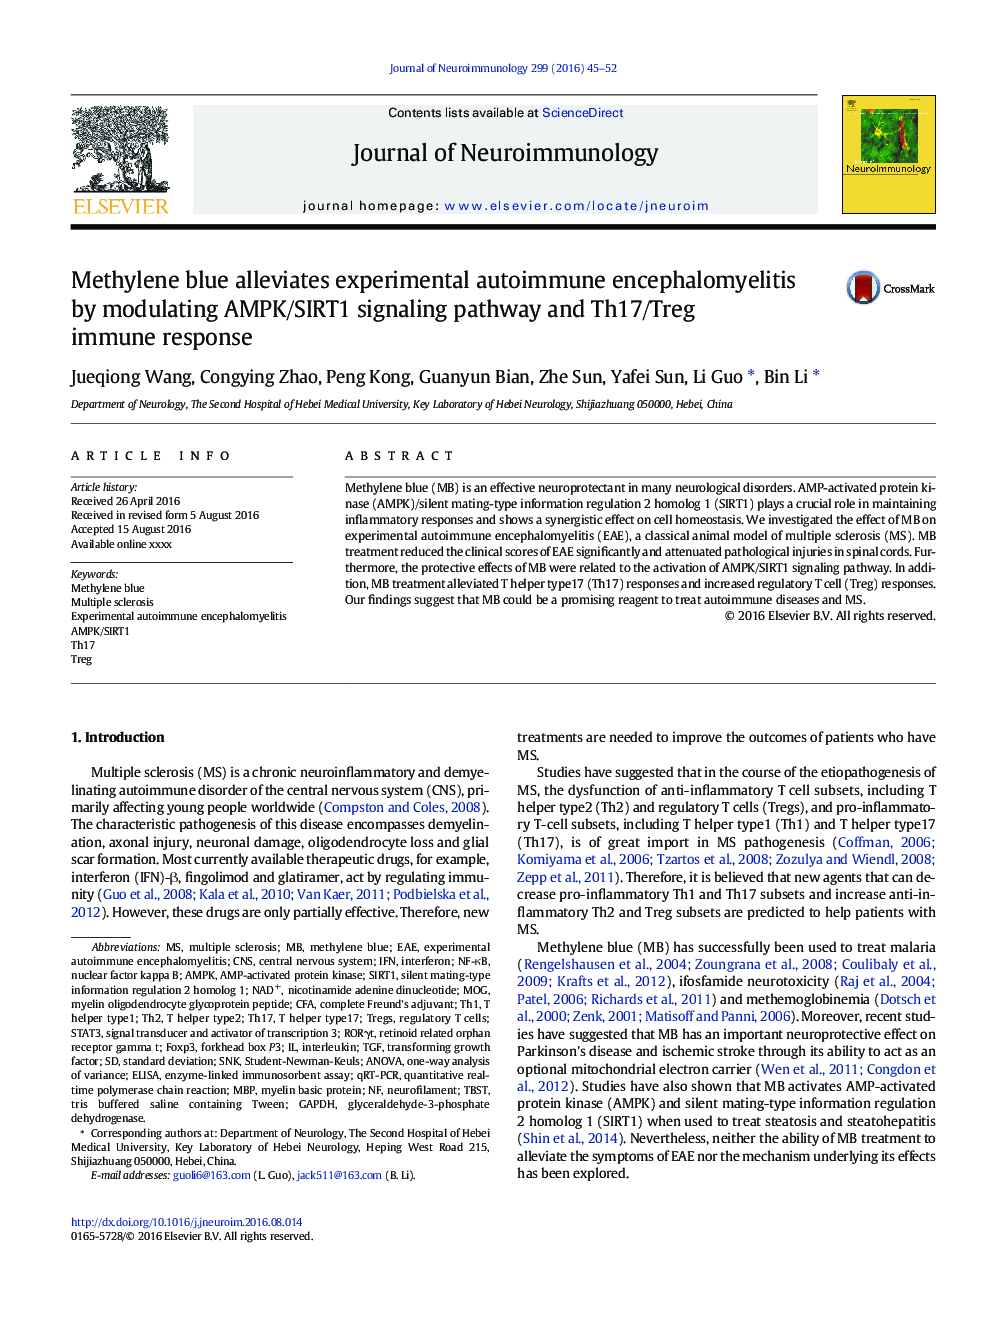 Methylene blue alleviates experimental autoimmune encephalomyelitis by modulating AMPK/SIRT1 signaling pathway and Th17/Treg immune response